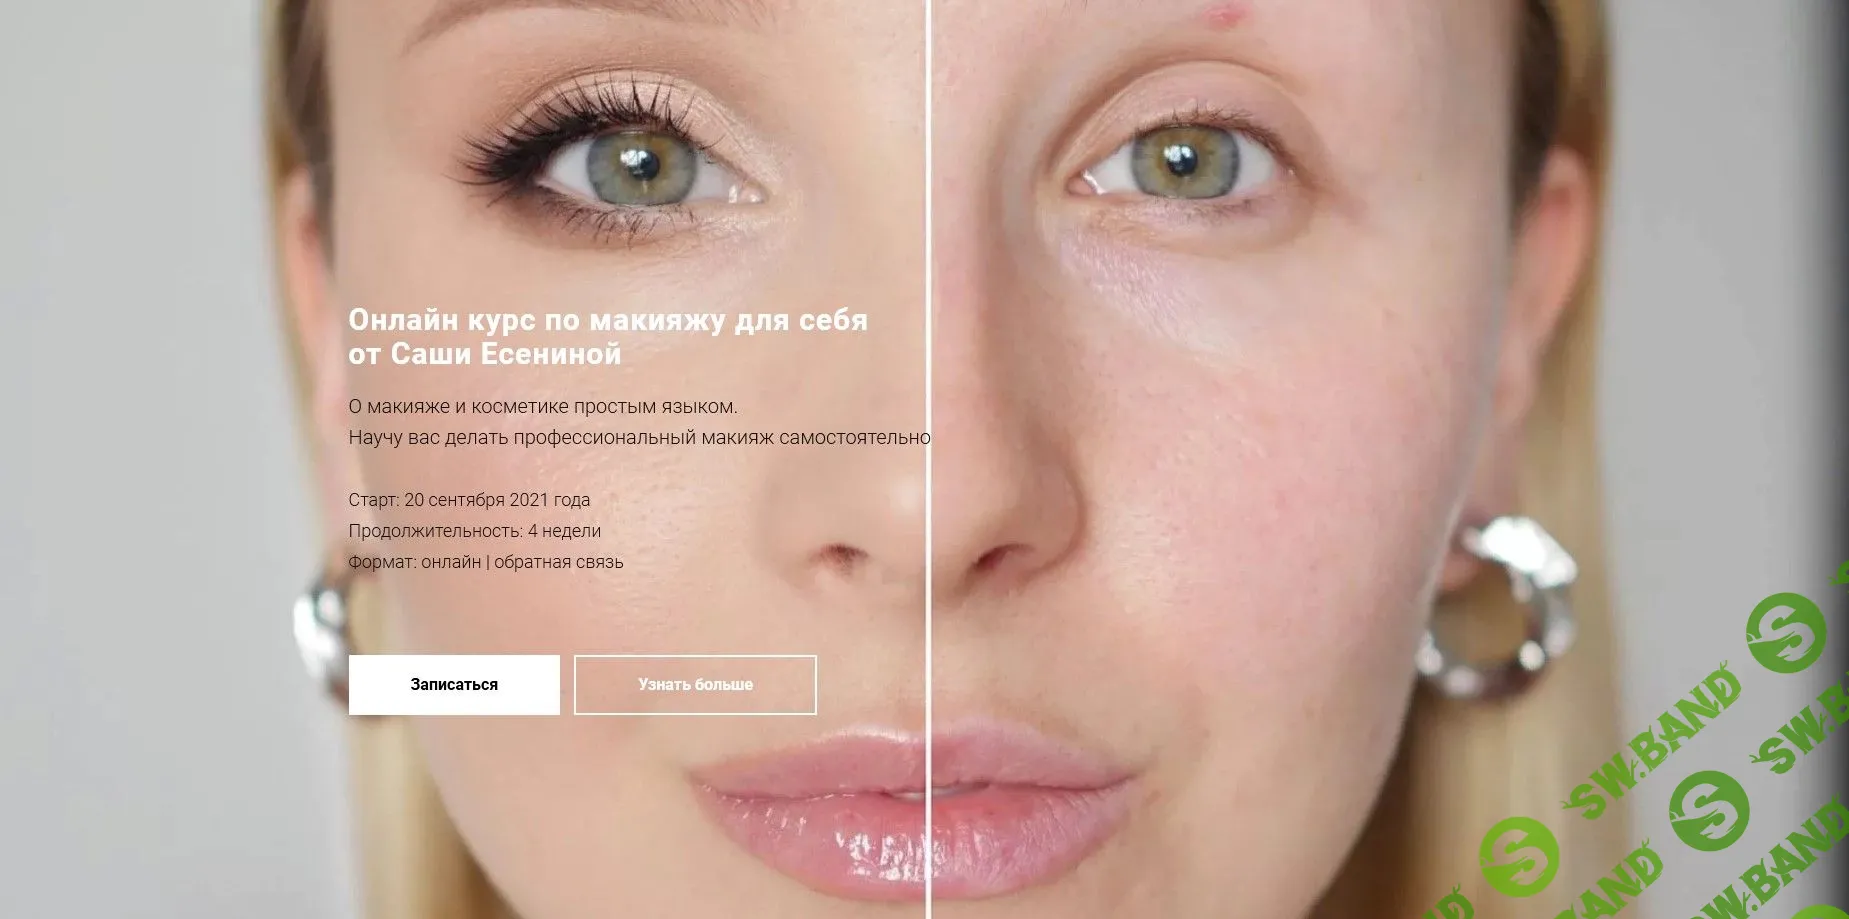 [Саша Есенина] Онлайн курс по макияжу для себя (2021)